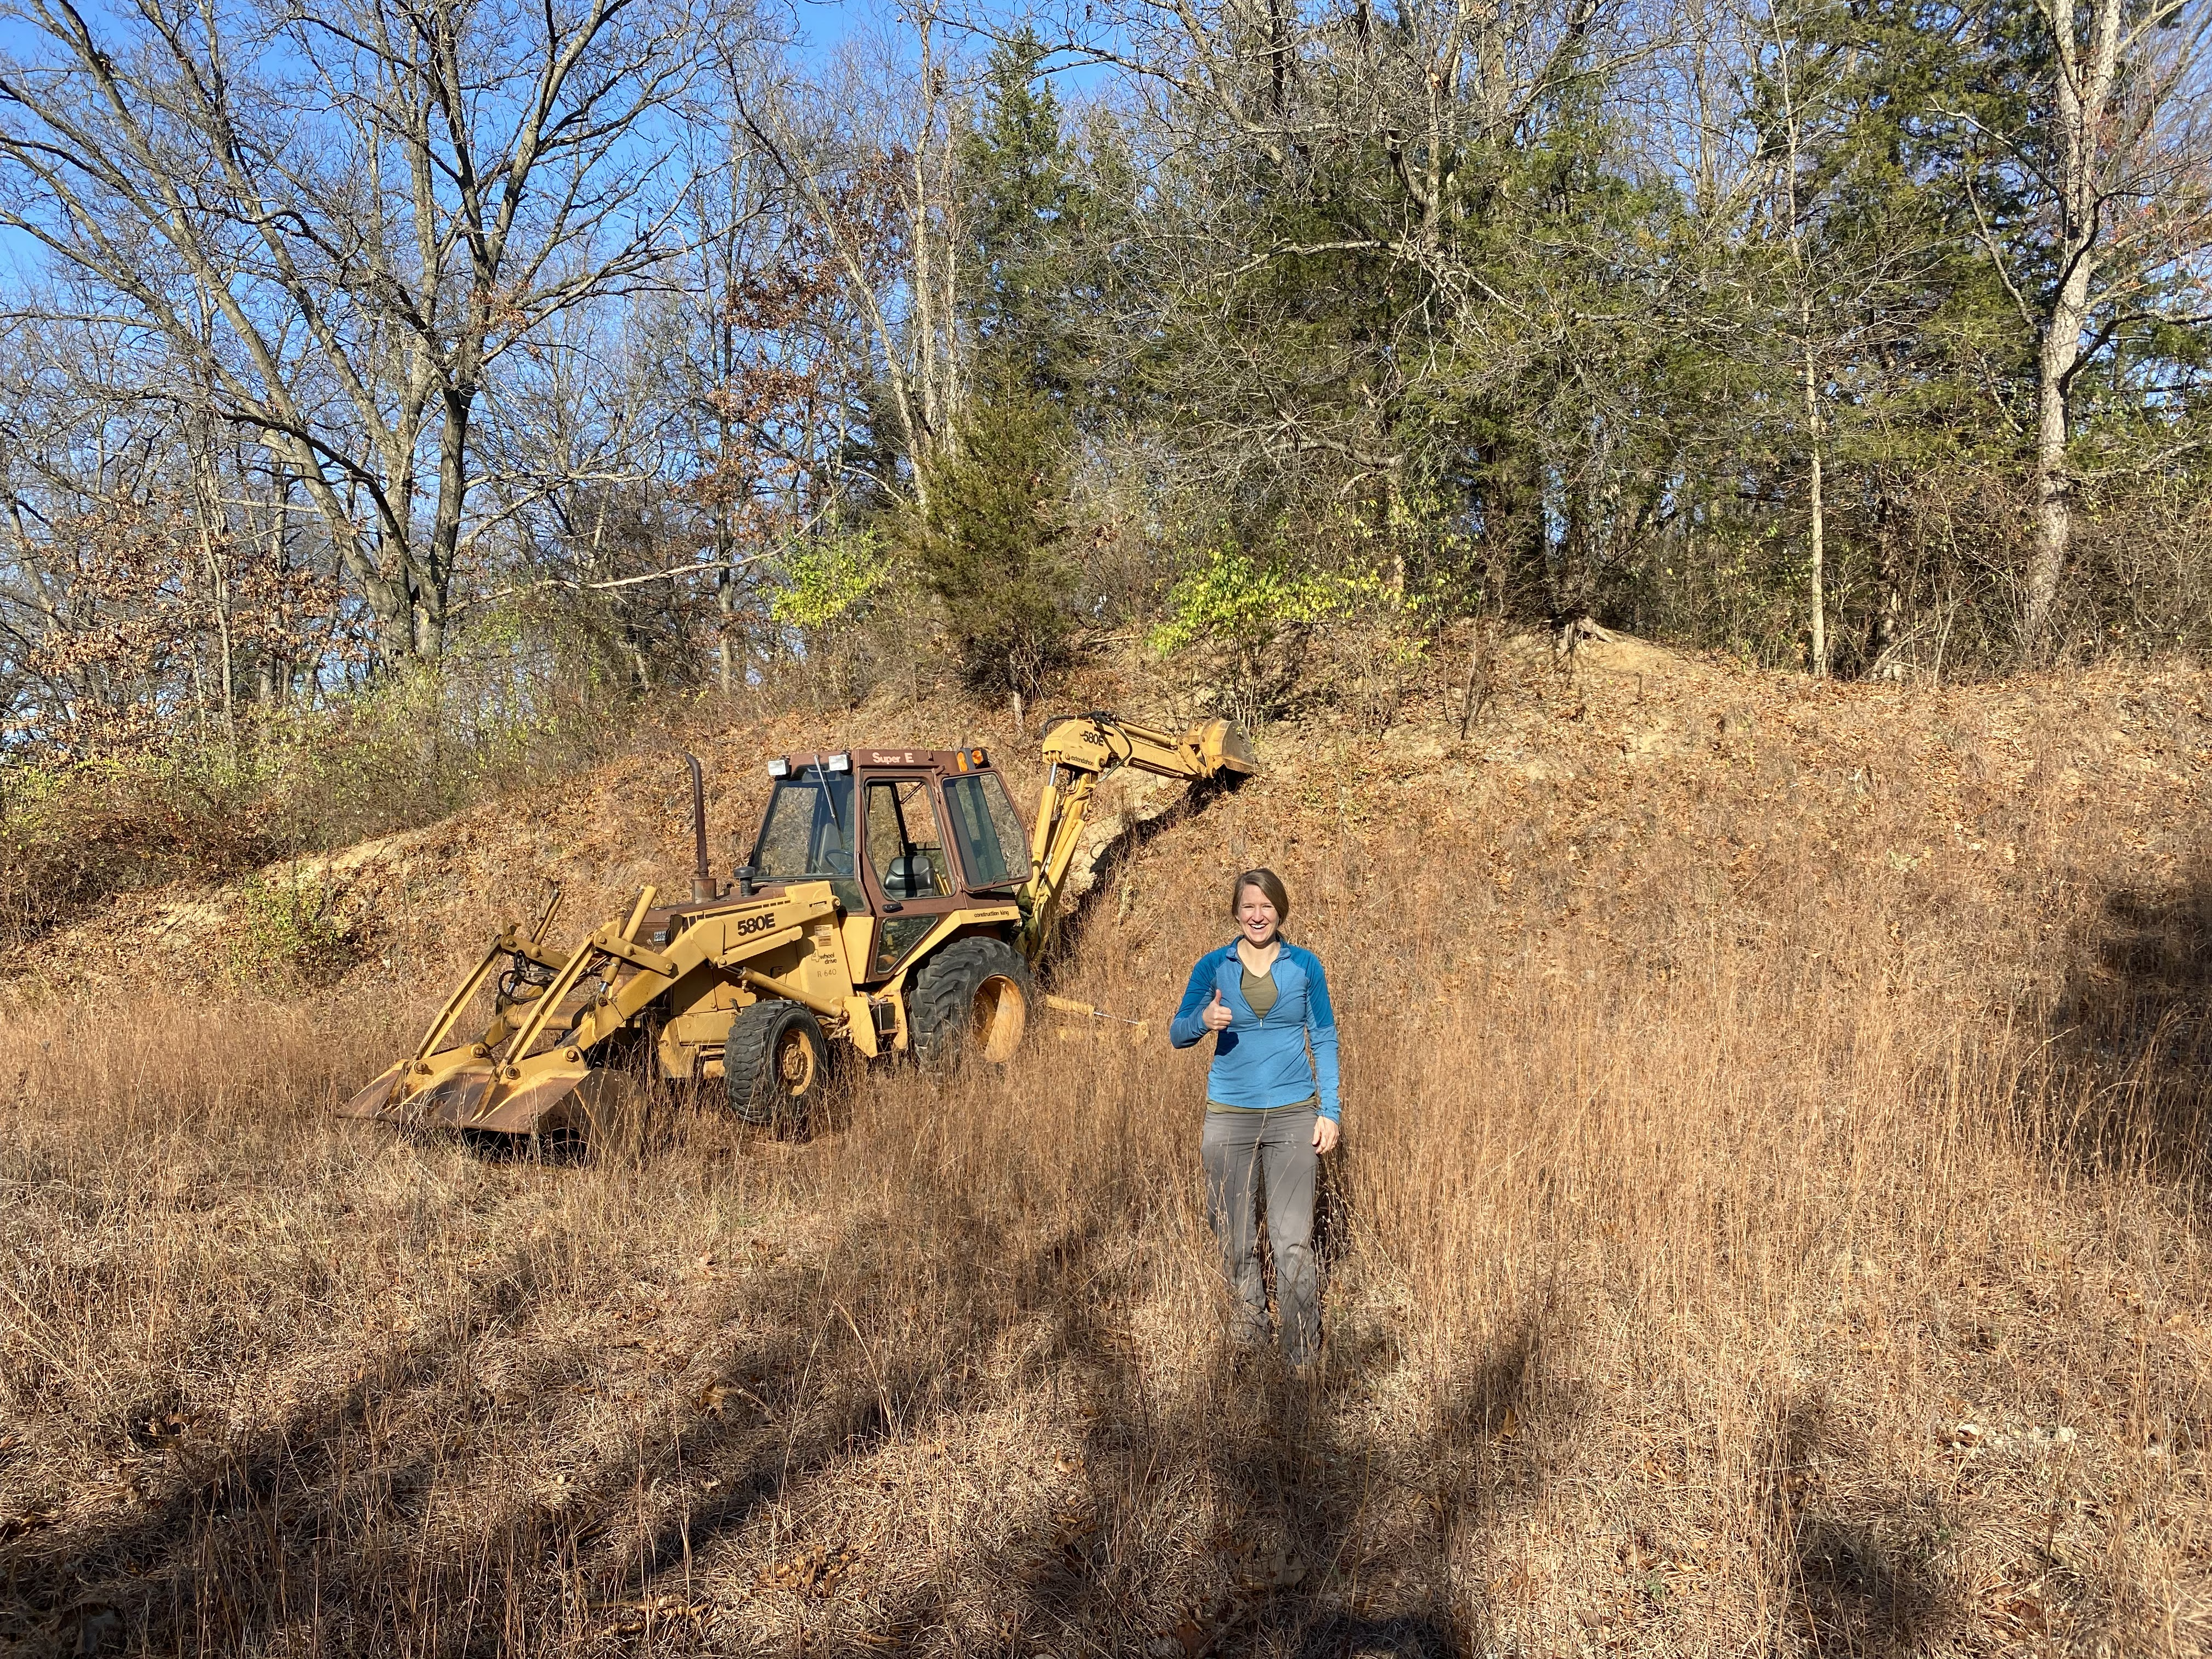 An excavator is ready to help us get rid of pesky vegetation